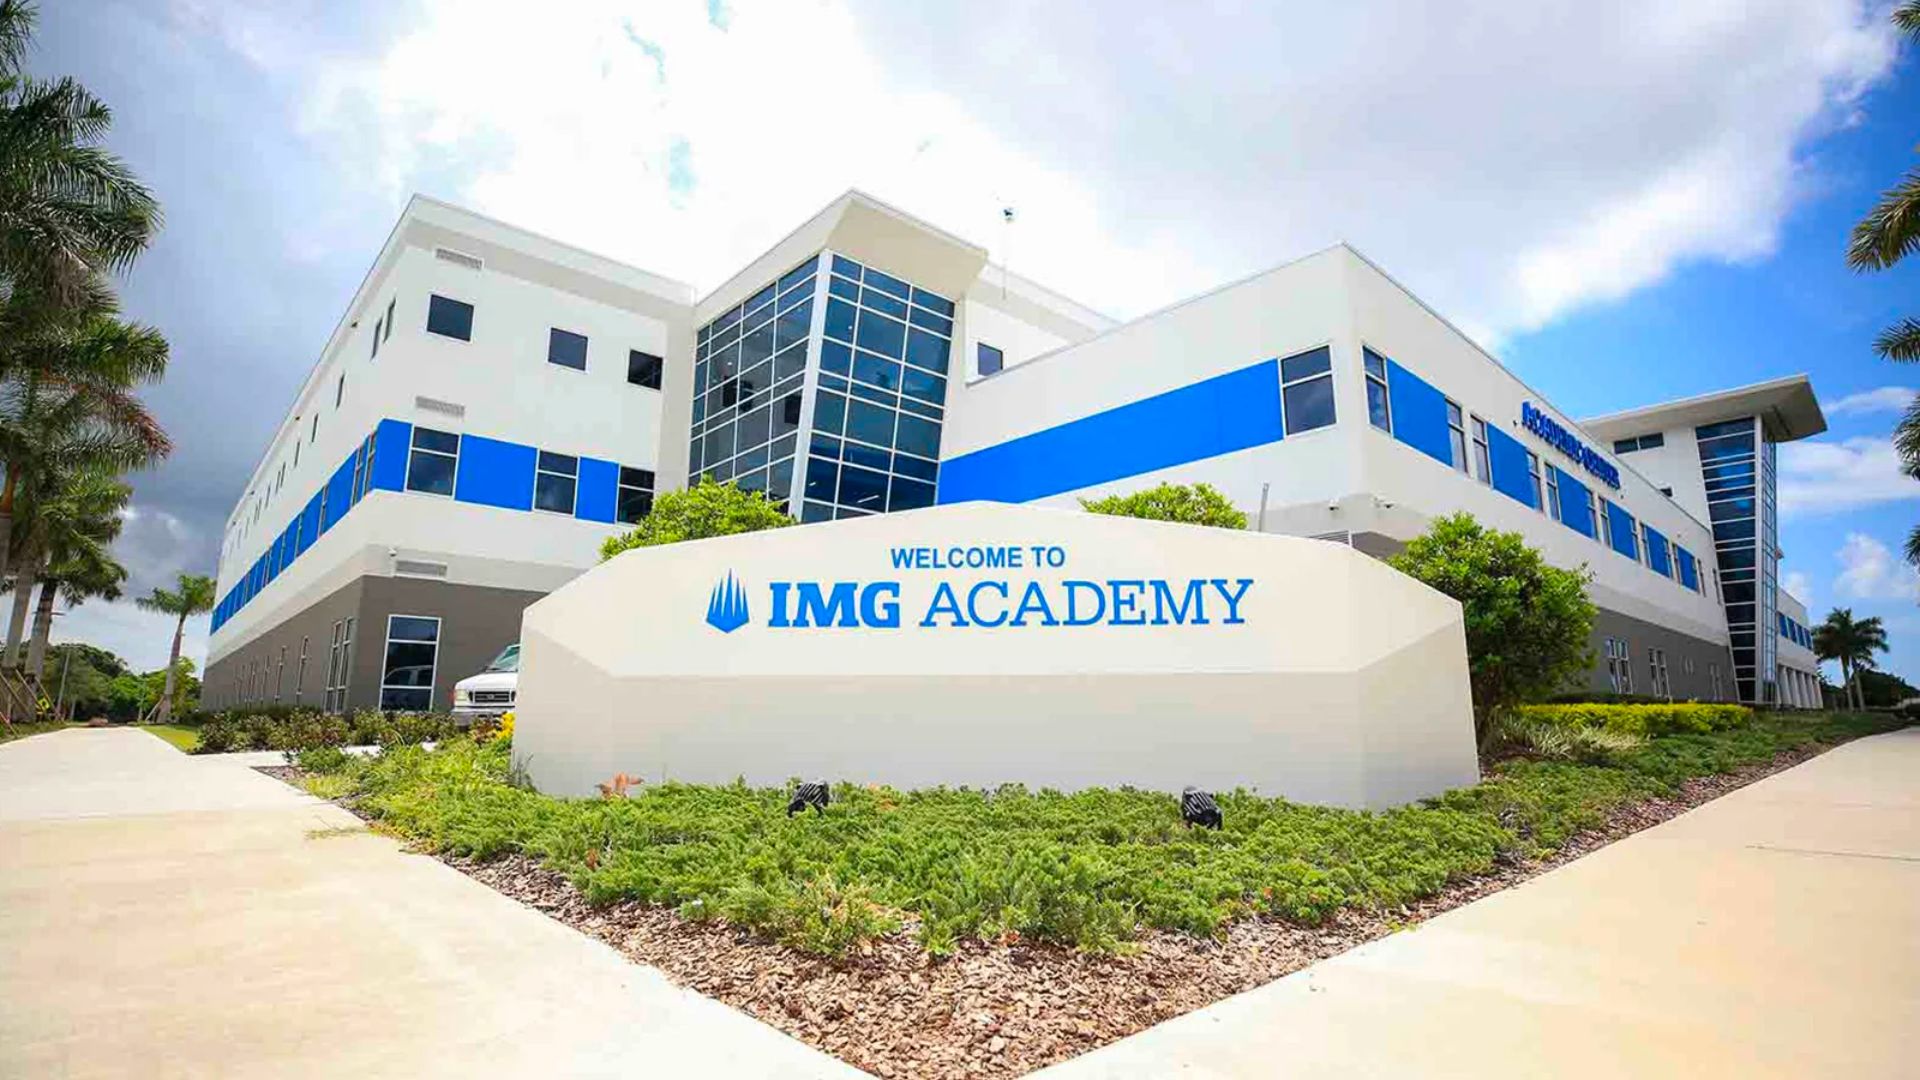 IMG Academy Receives New Athlete Investors Through Patricof Co